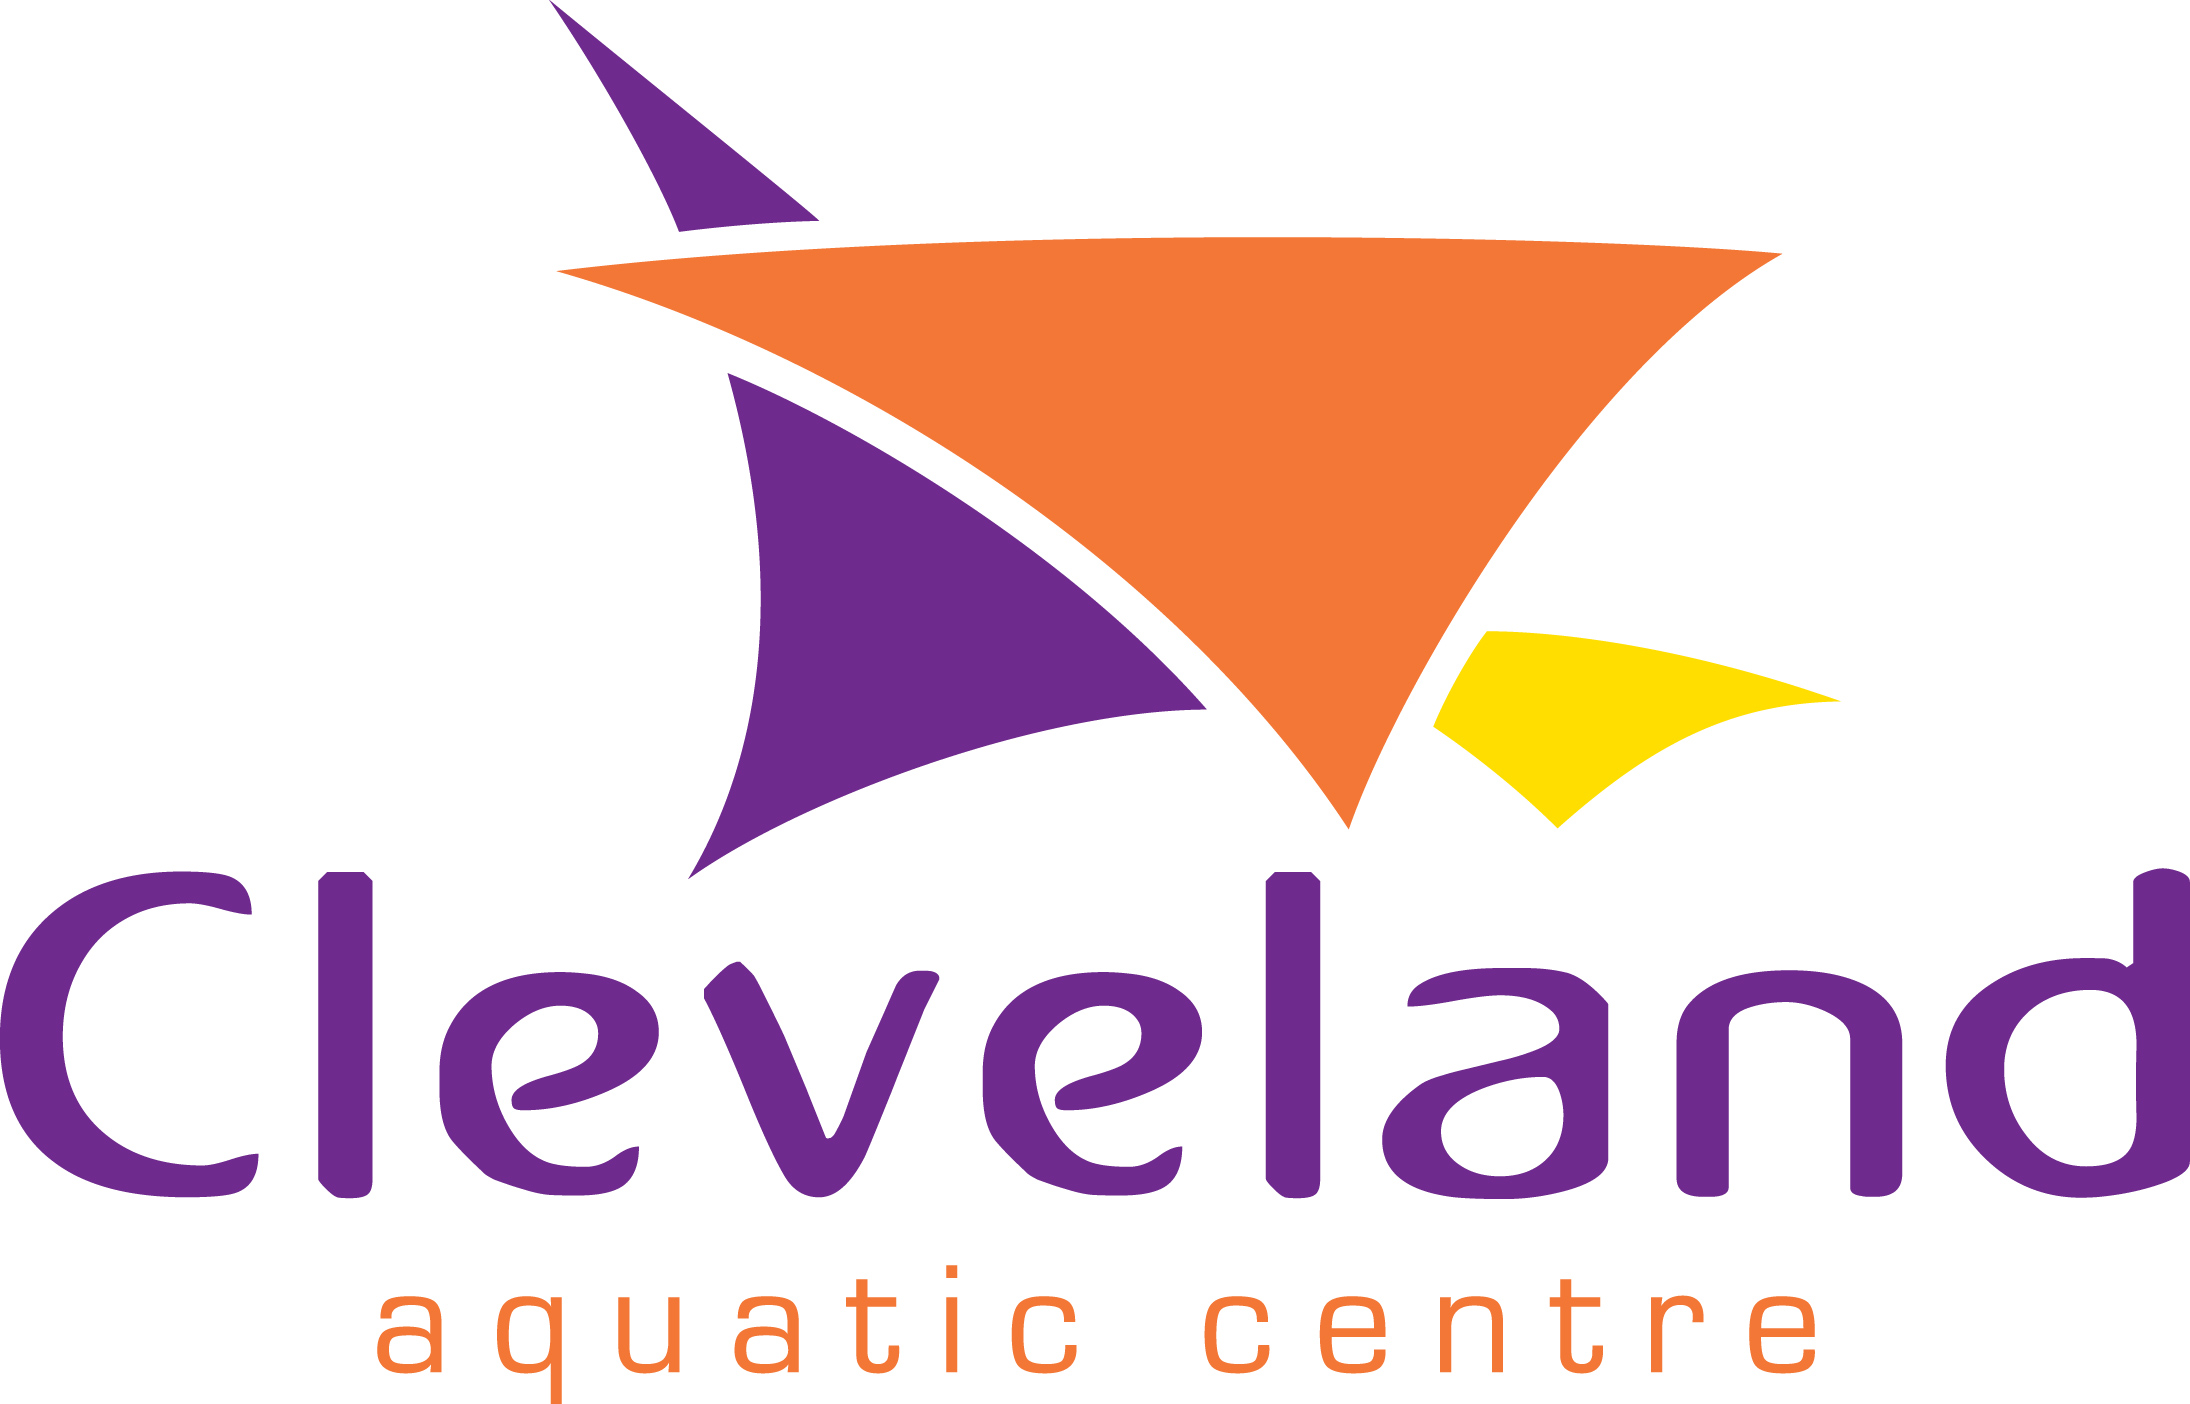 Cleveland Aquatic Centre